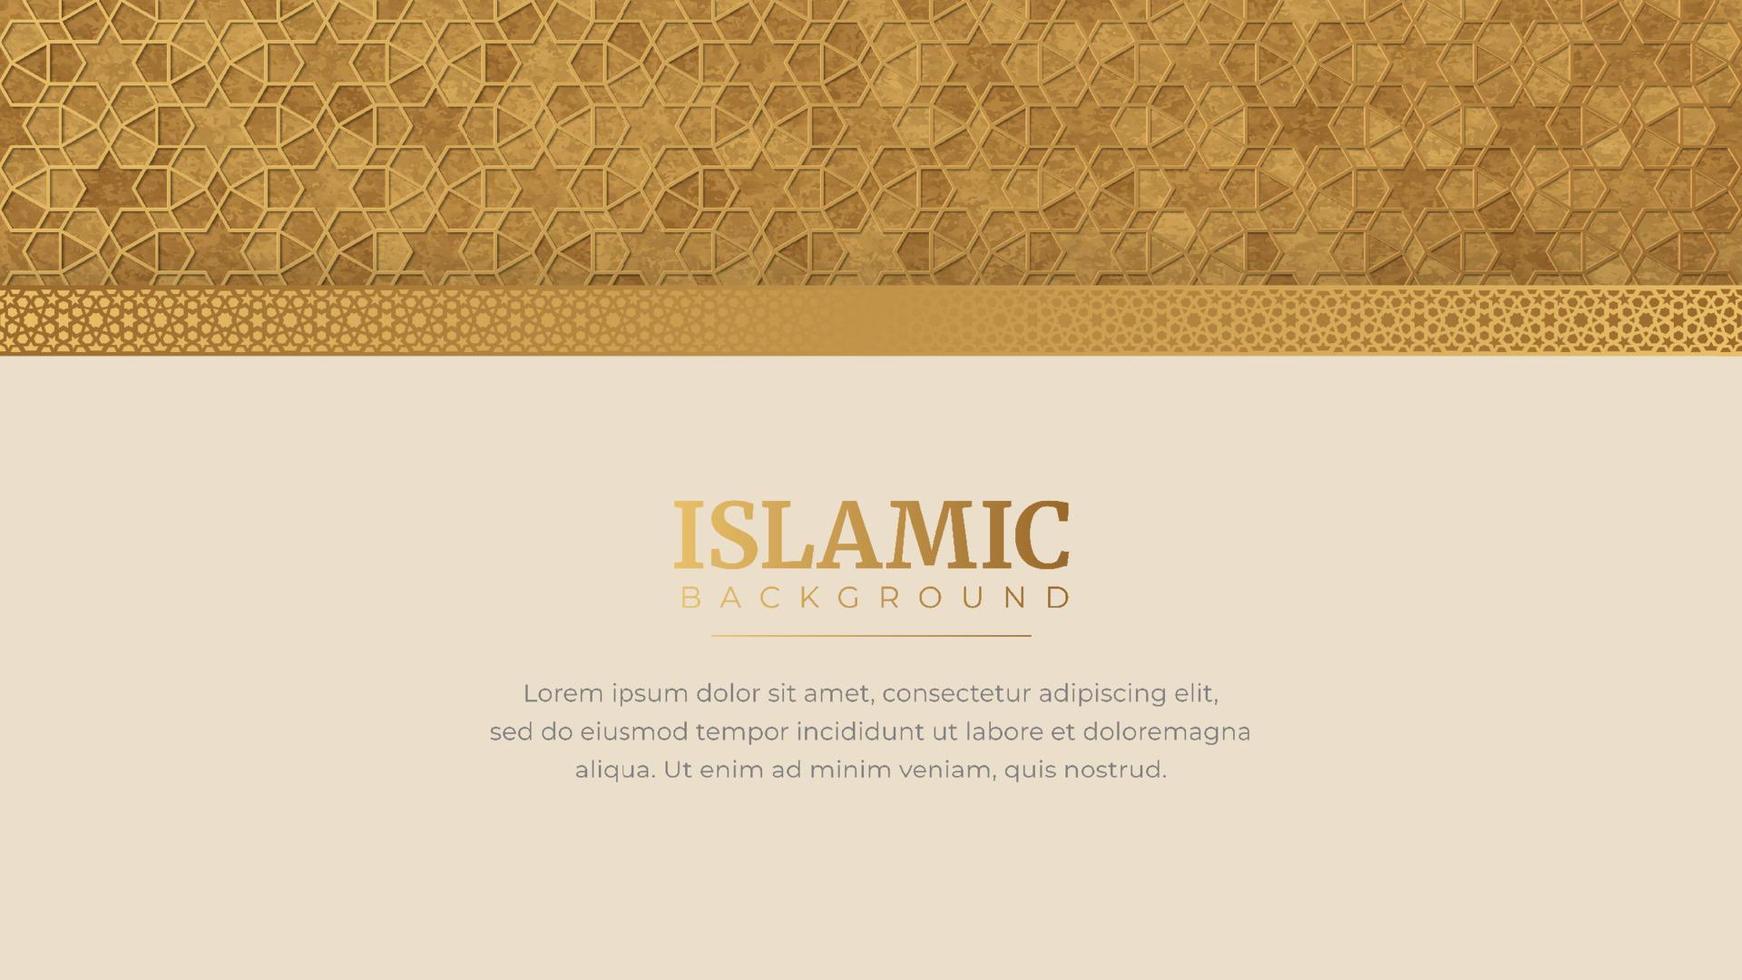 islâmico árabe arabesco mosaico padronizar fundo Projeto modelo vetor